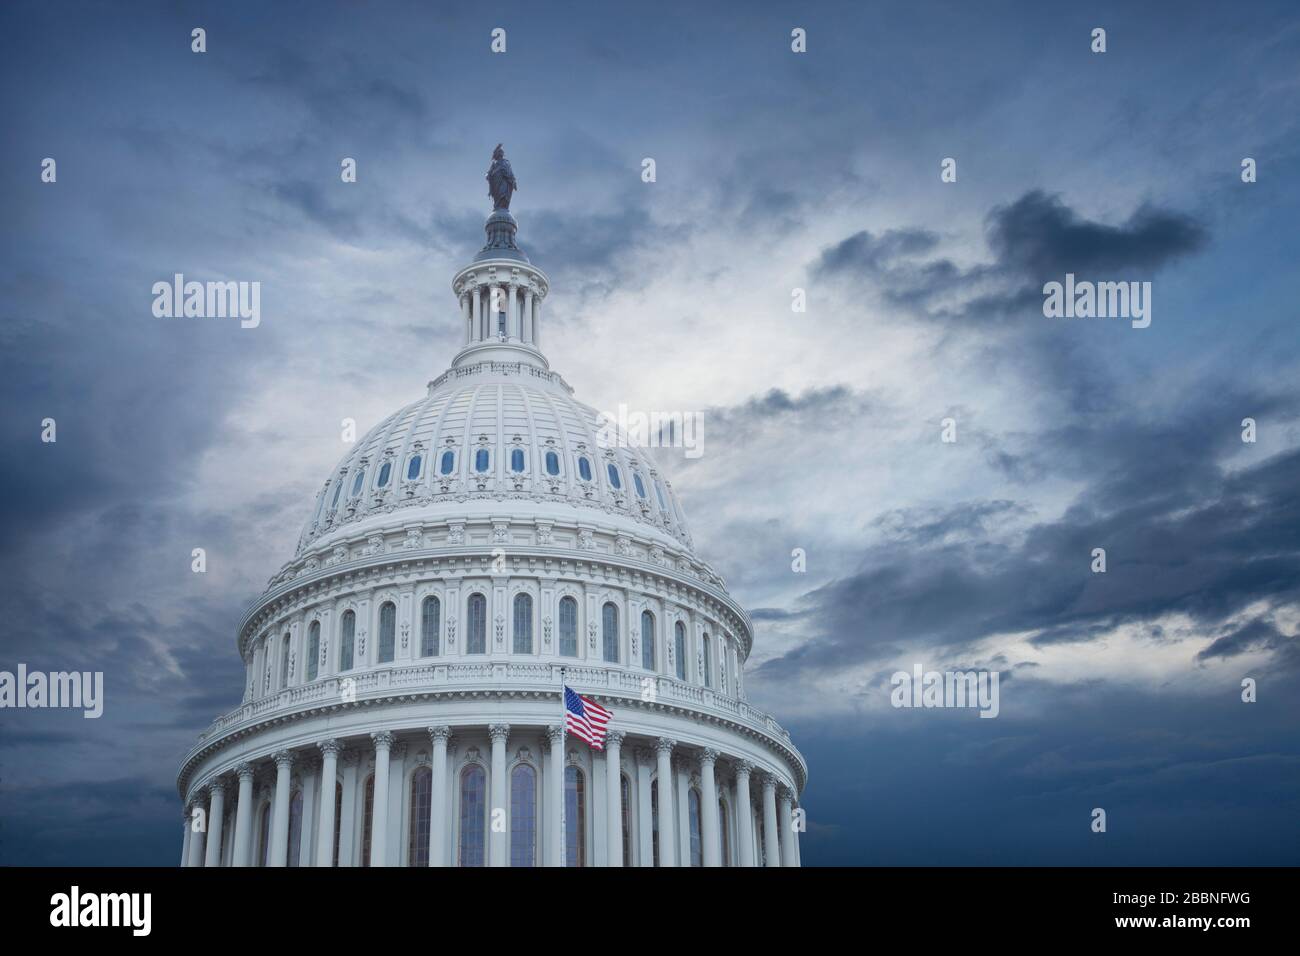 US-Kapitolkuppel unter stürmischem Himmel Stockfoto